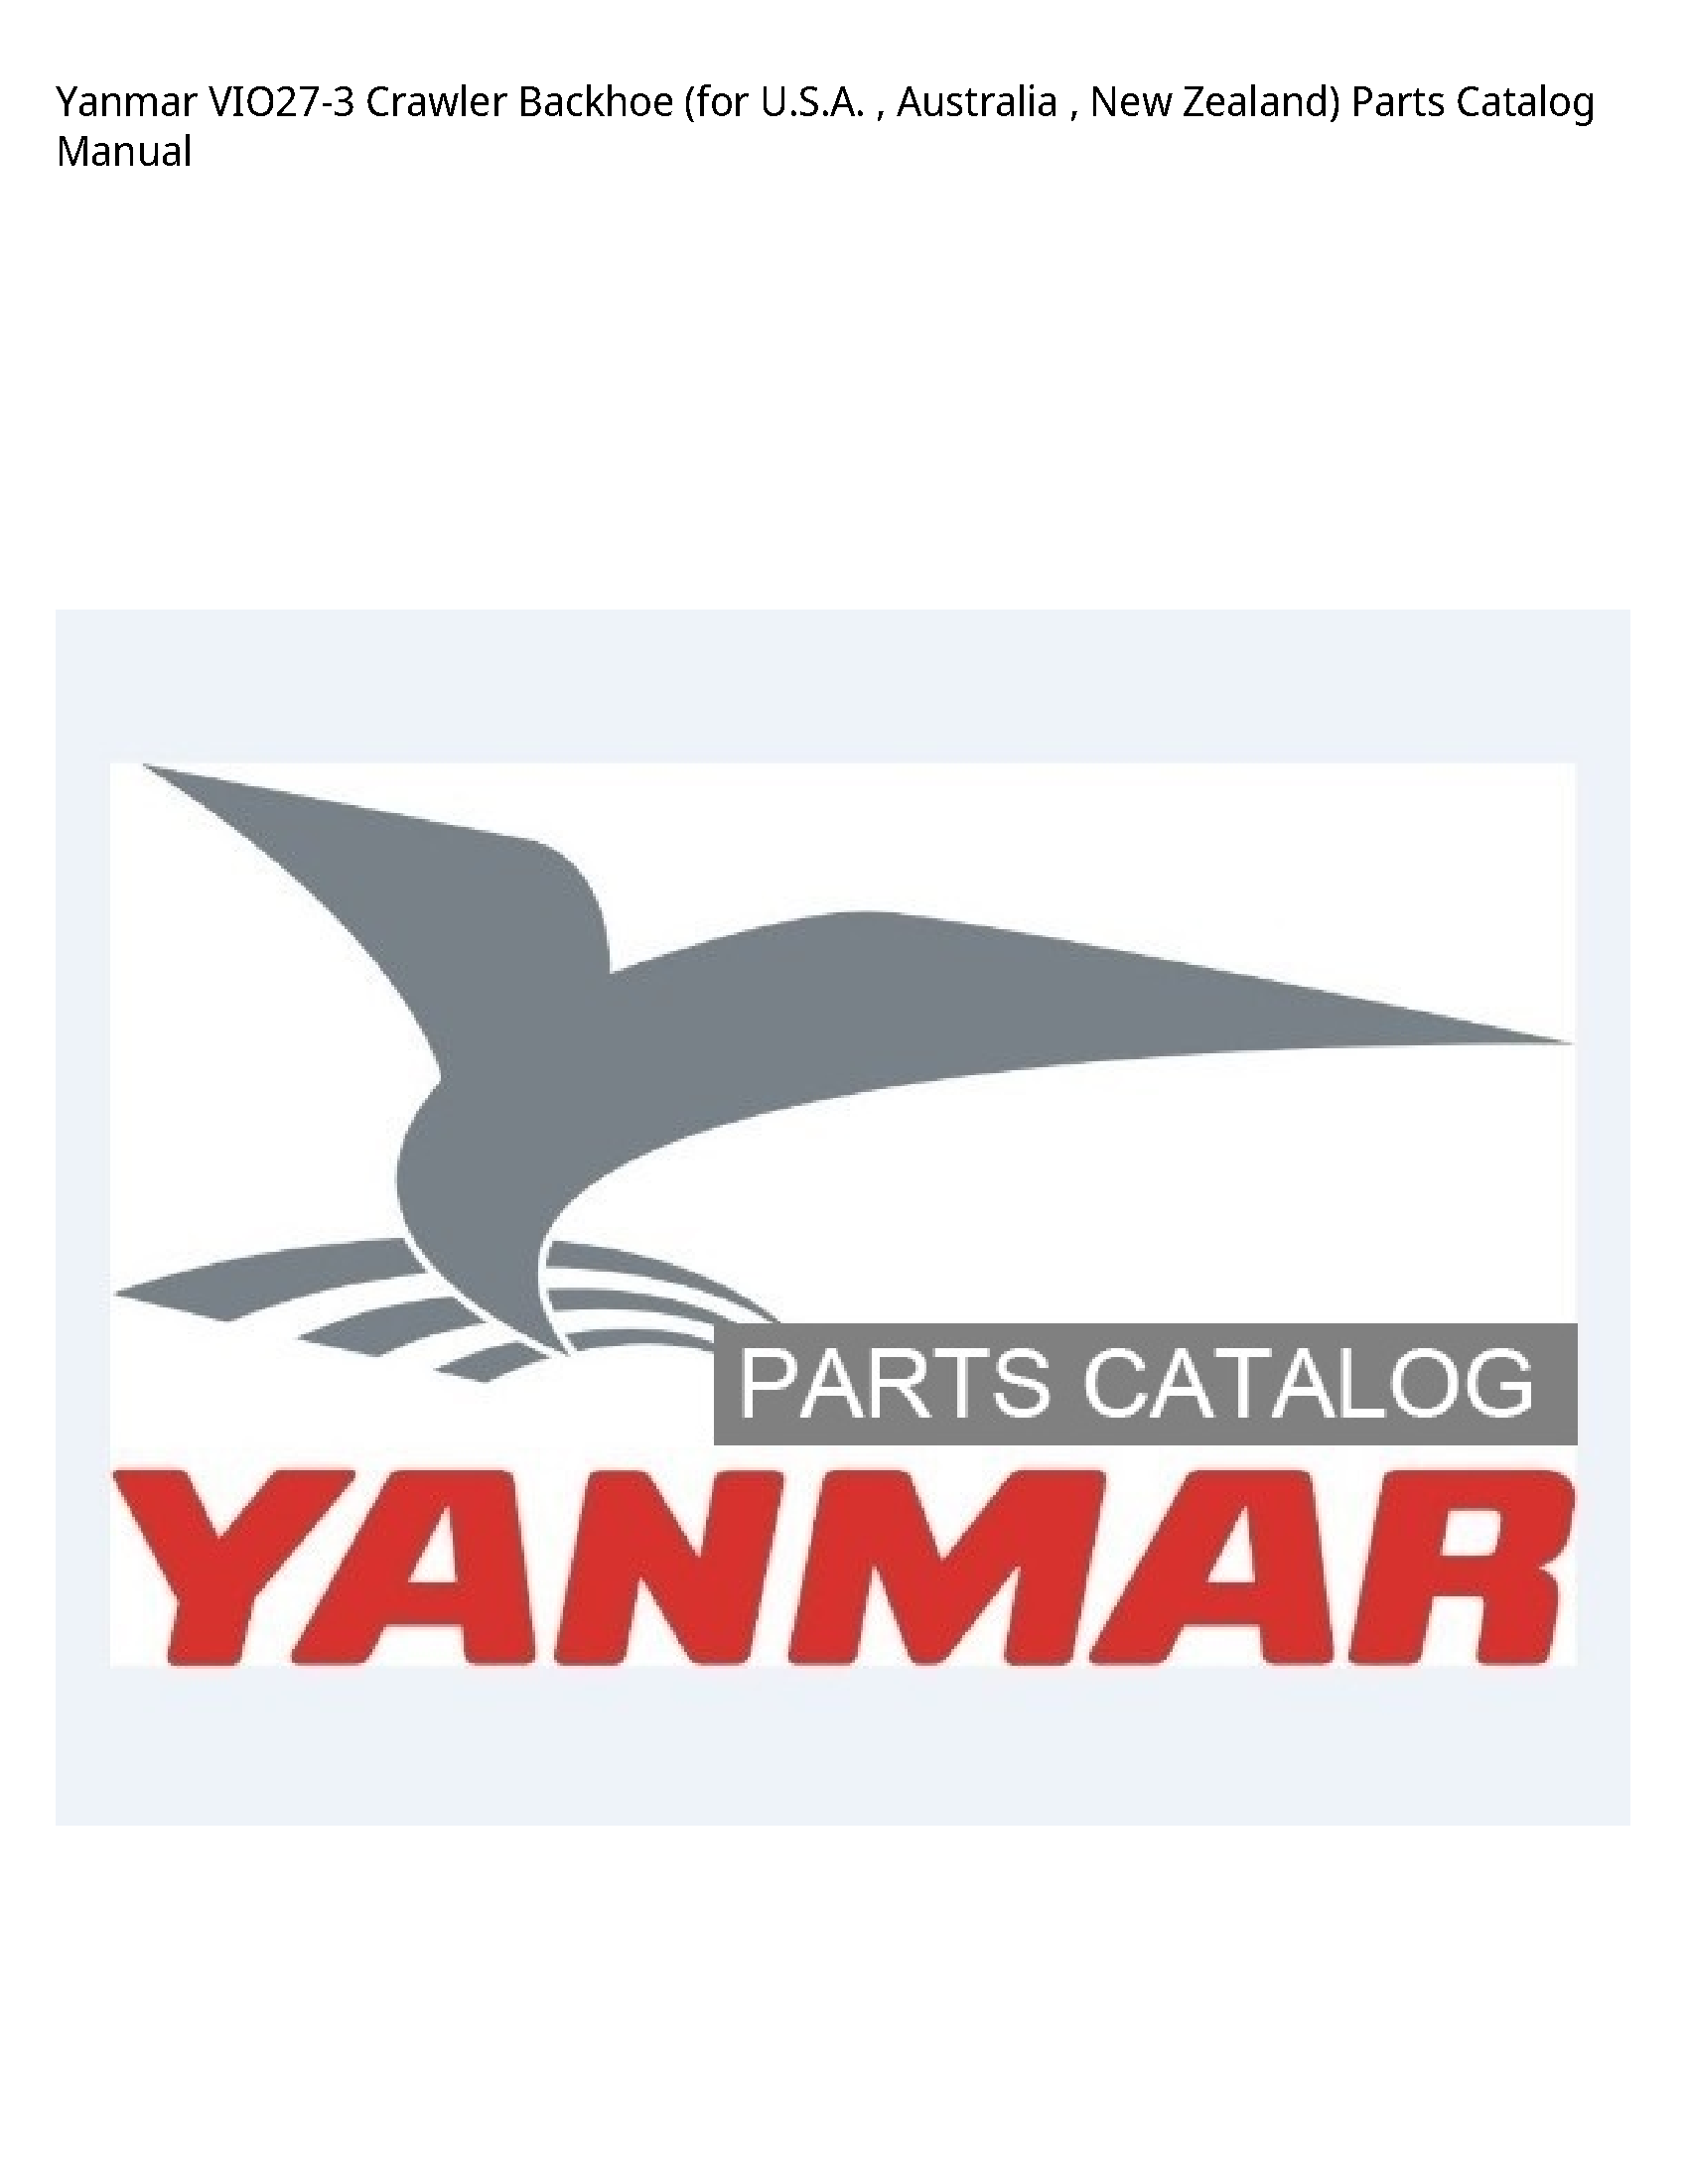 Yanmar VIO27-3 Crawler Backhoe (for U.S.A. Australia New Zealand) Parts Catalog manual